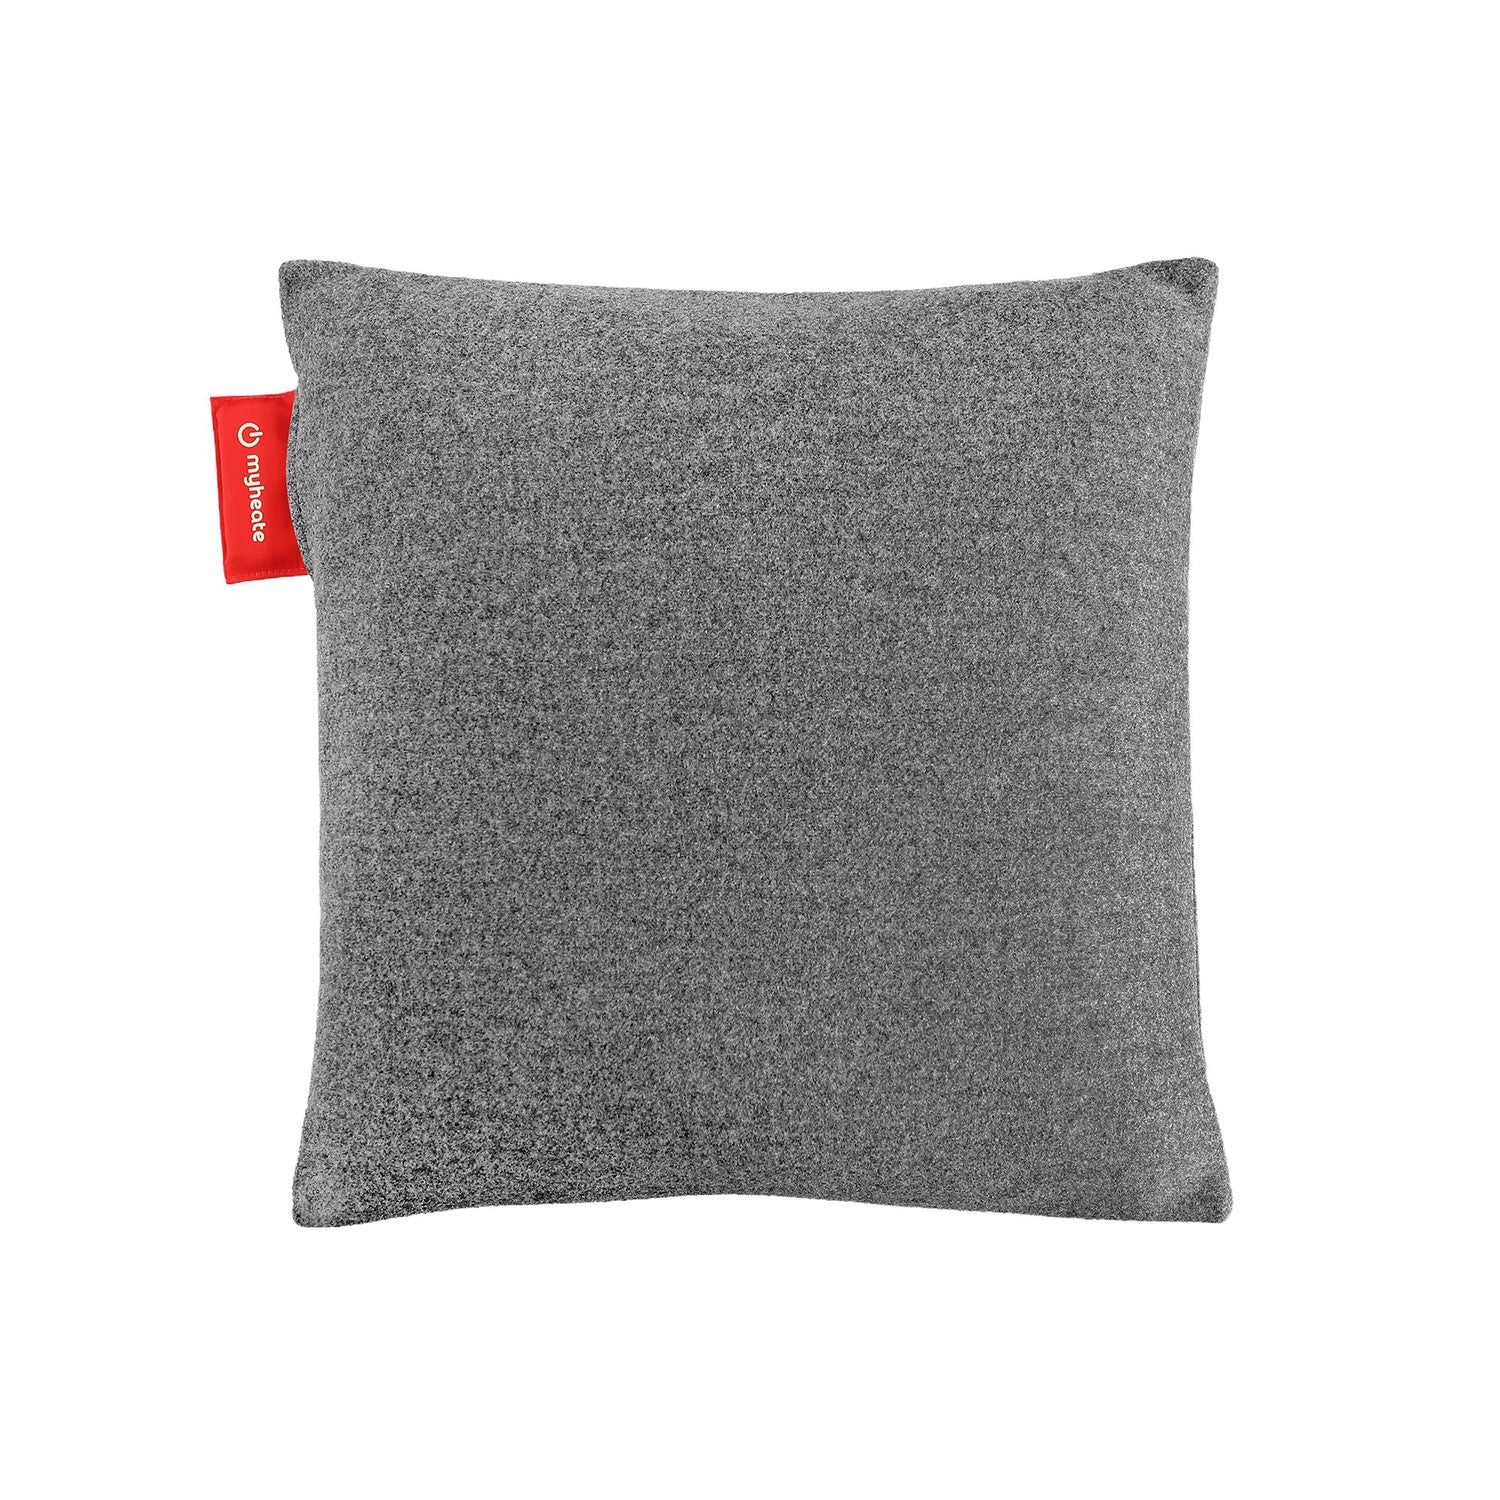 Heated cushion - Original